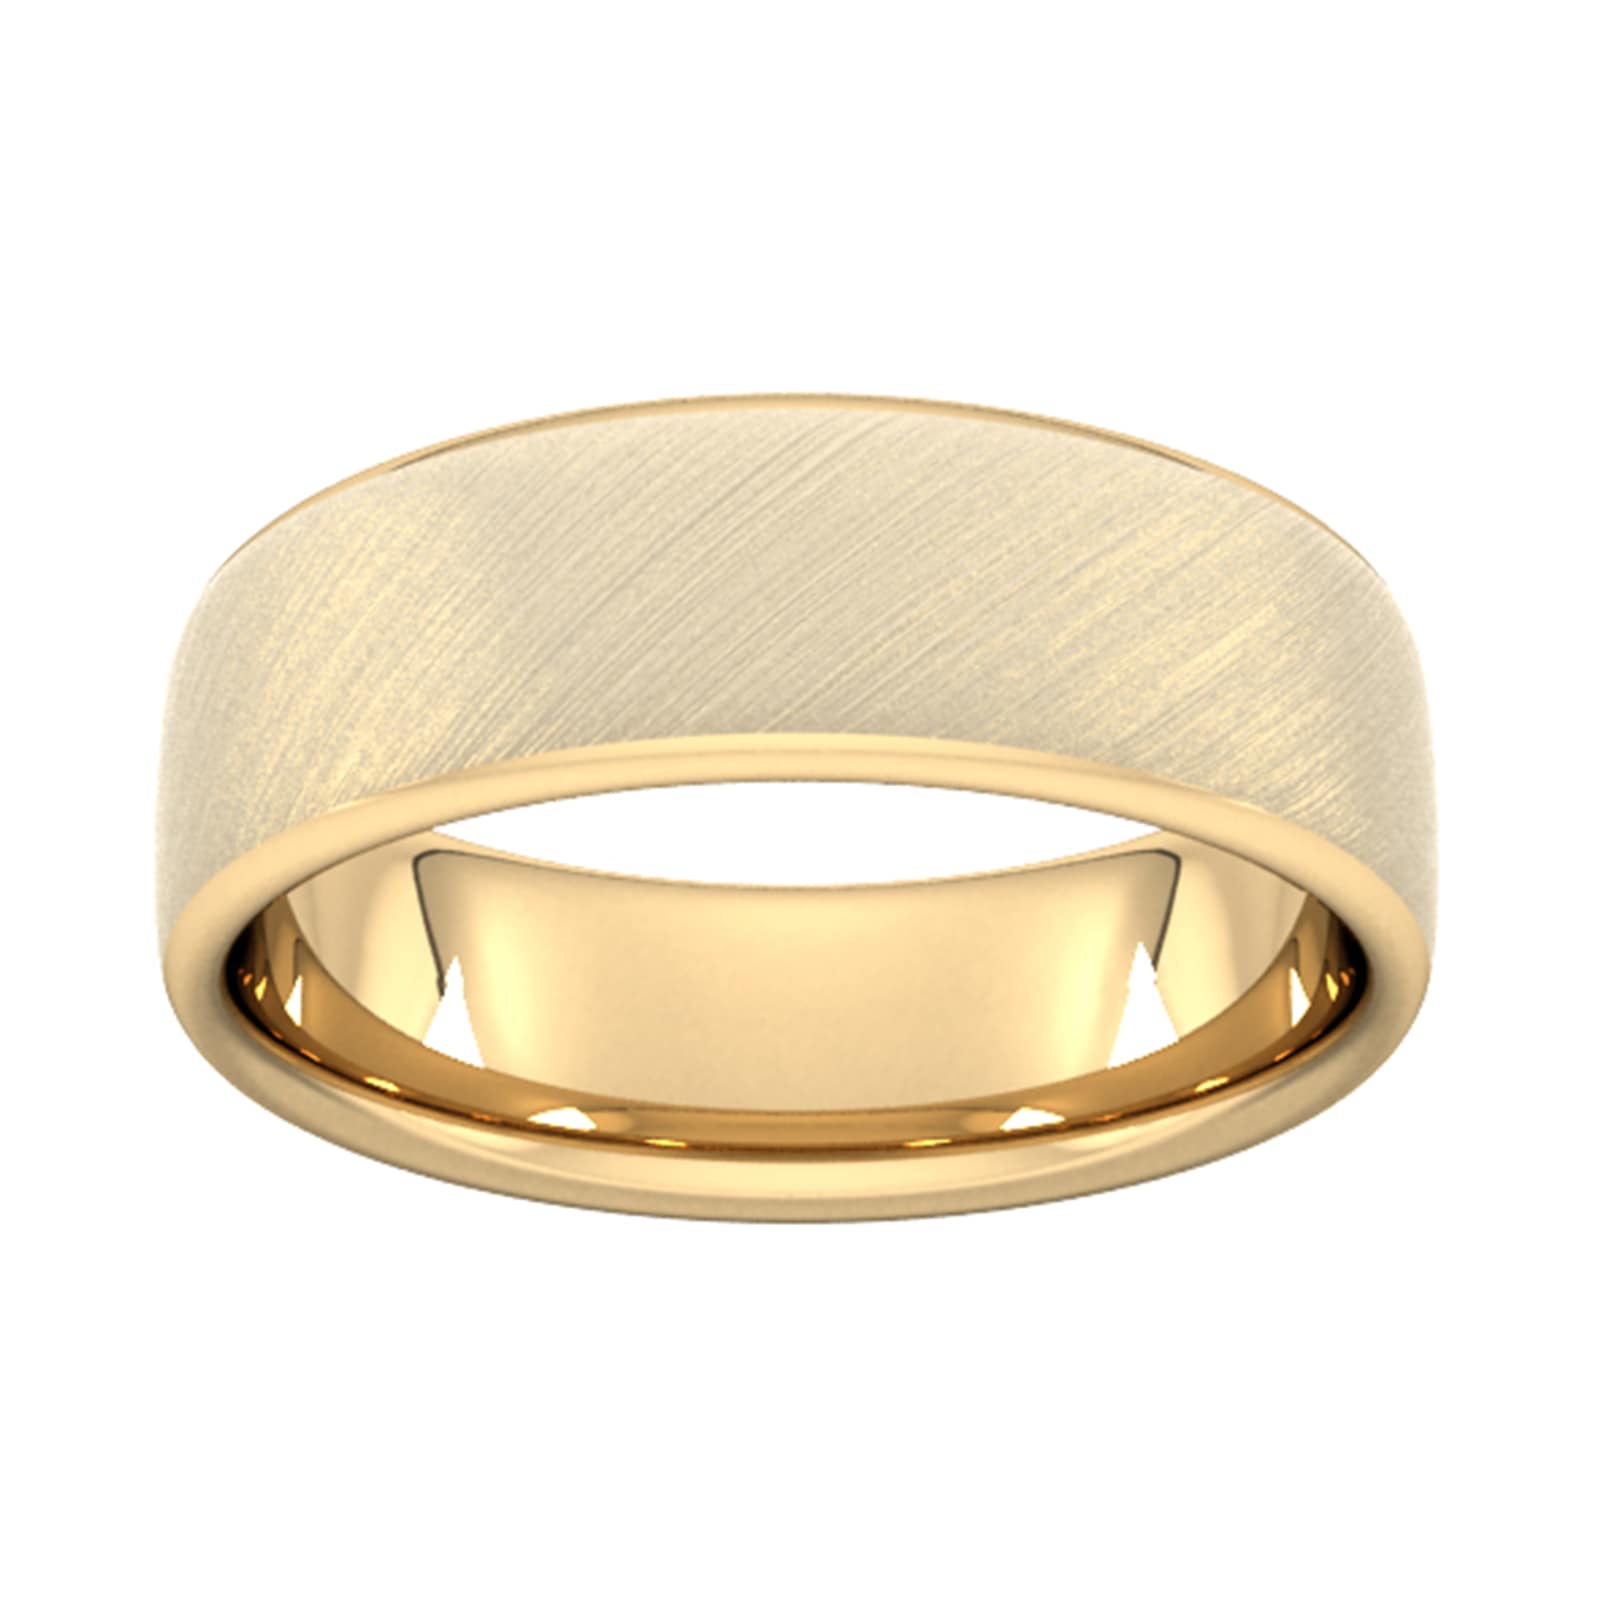 7mm Traditional Court Heavy Diagonal Matt Finish Wedding Ring In 18 Carat Yellow Gold - Ring Size K